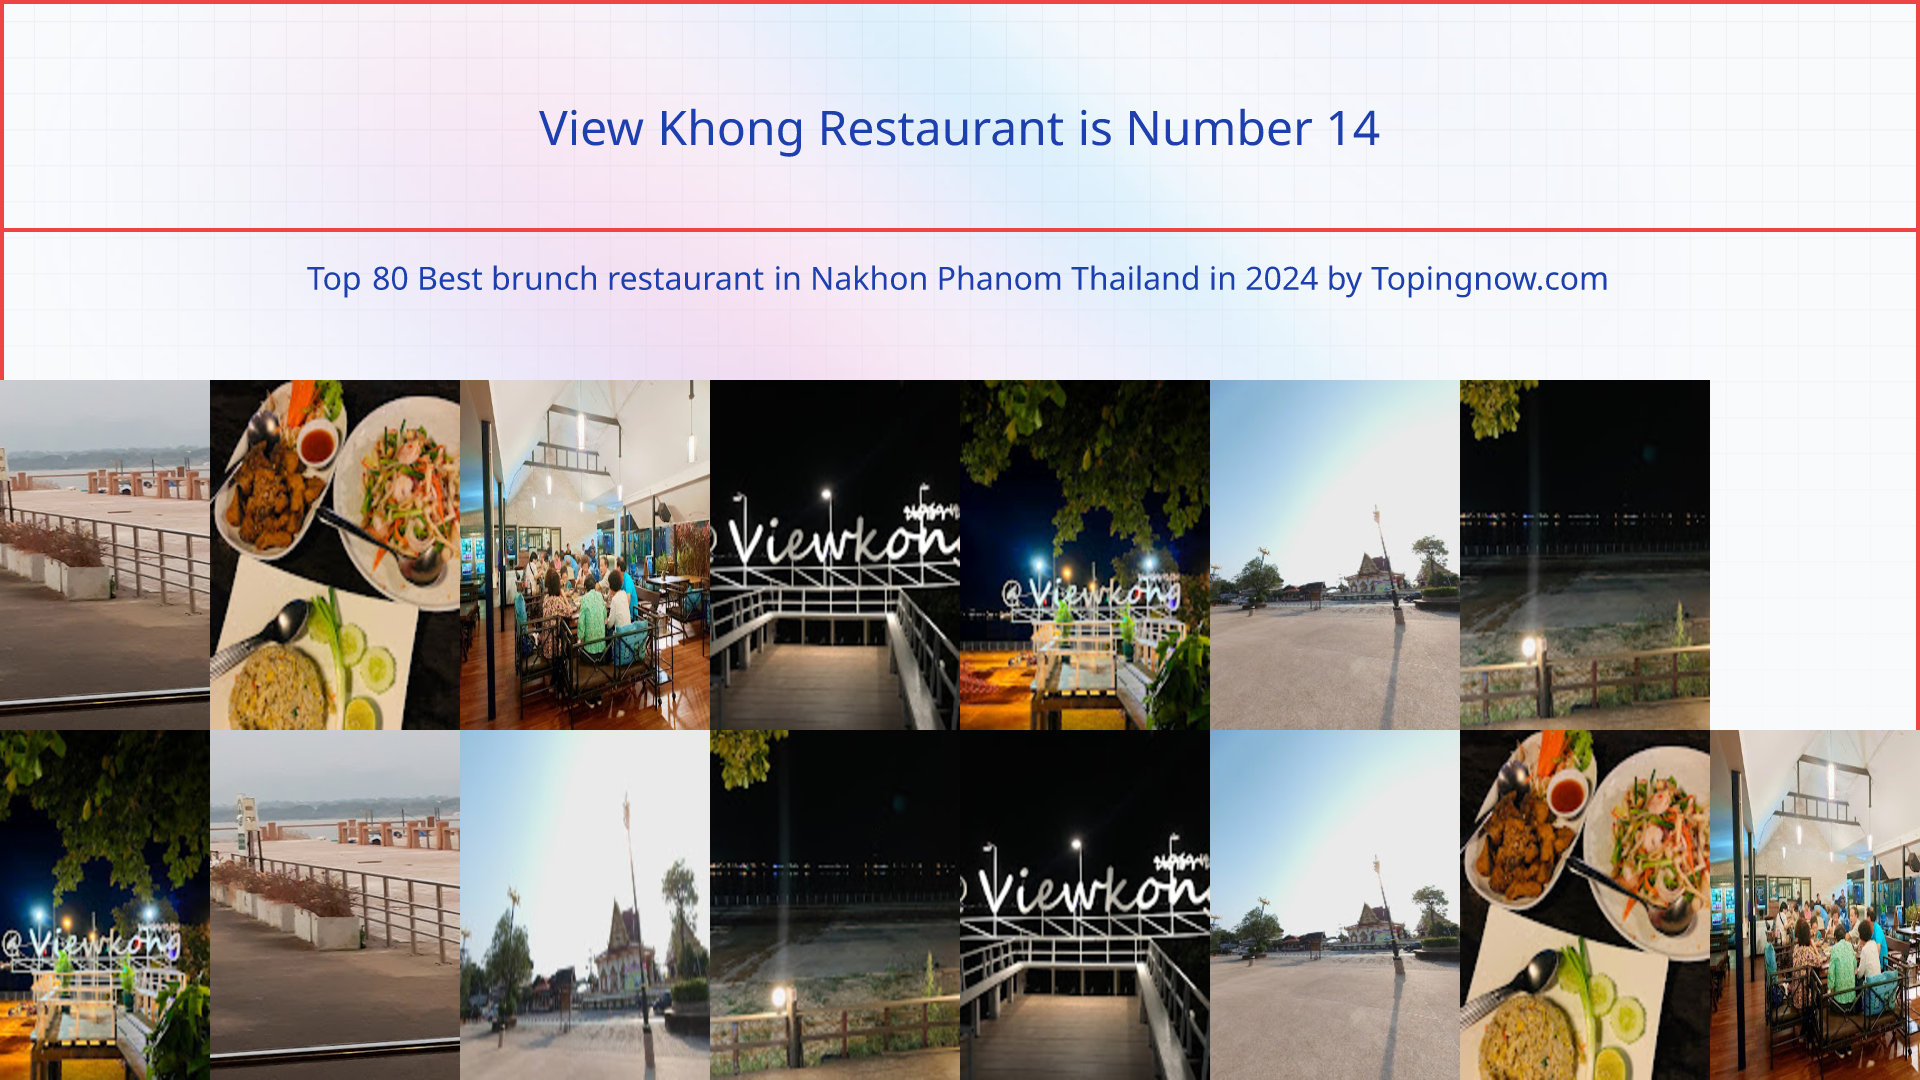 View Khong Restaurant: Top 80 Best brunch restaurant in Nakhon Phanom Thailand in 2024